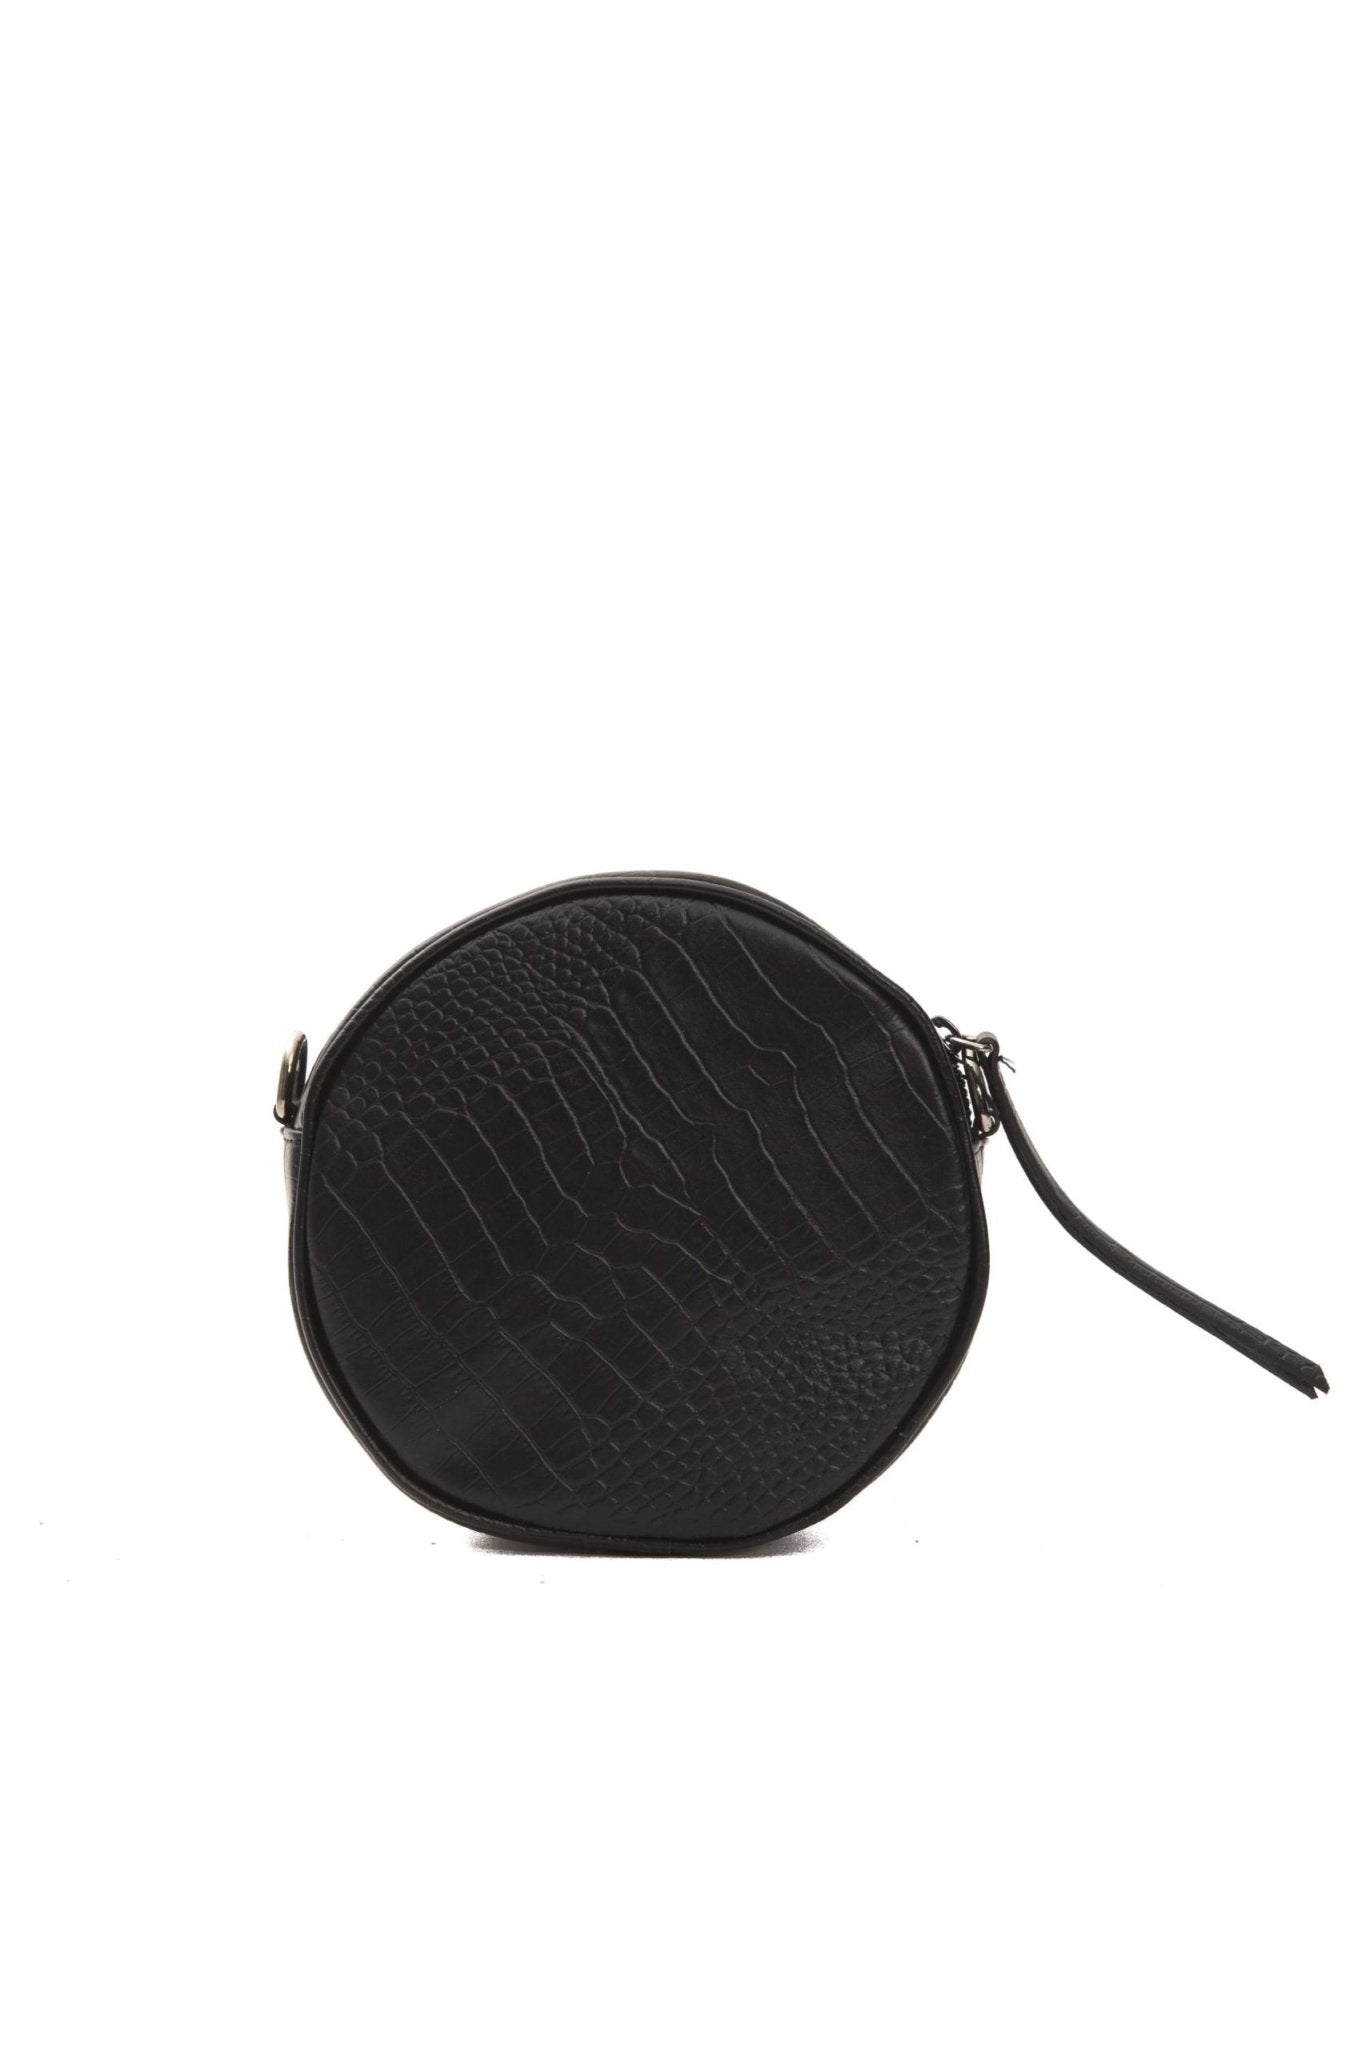 Pompei Donatella Black Leather Crossbody Bag - Fizigo